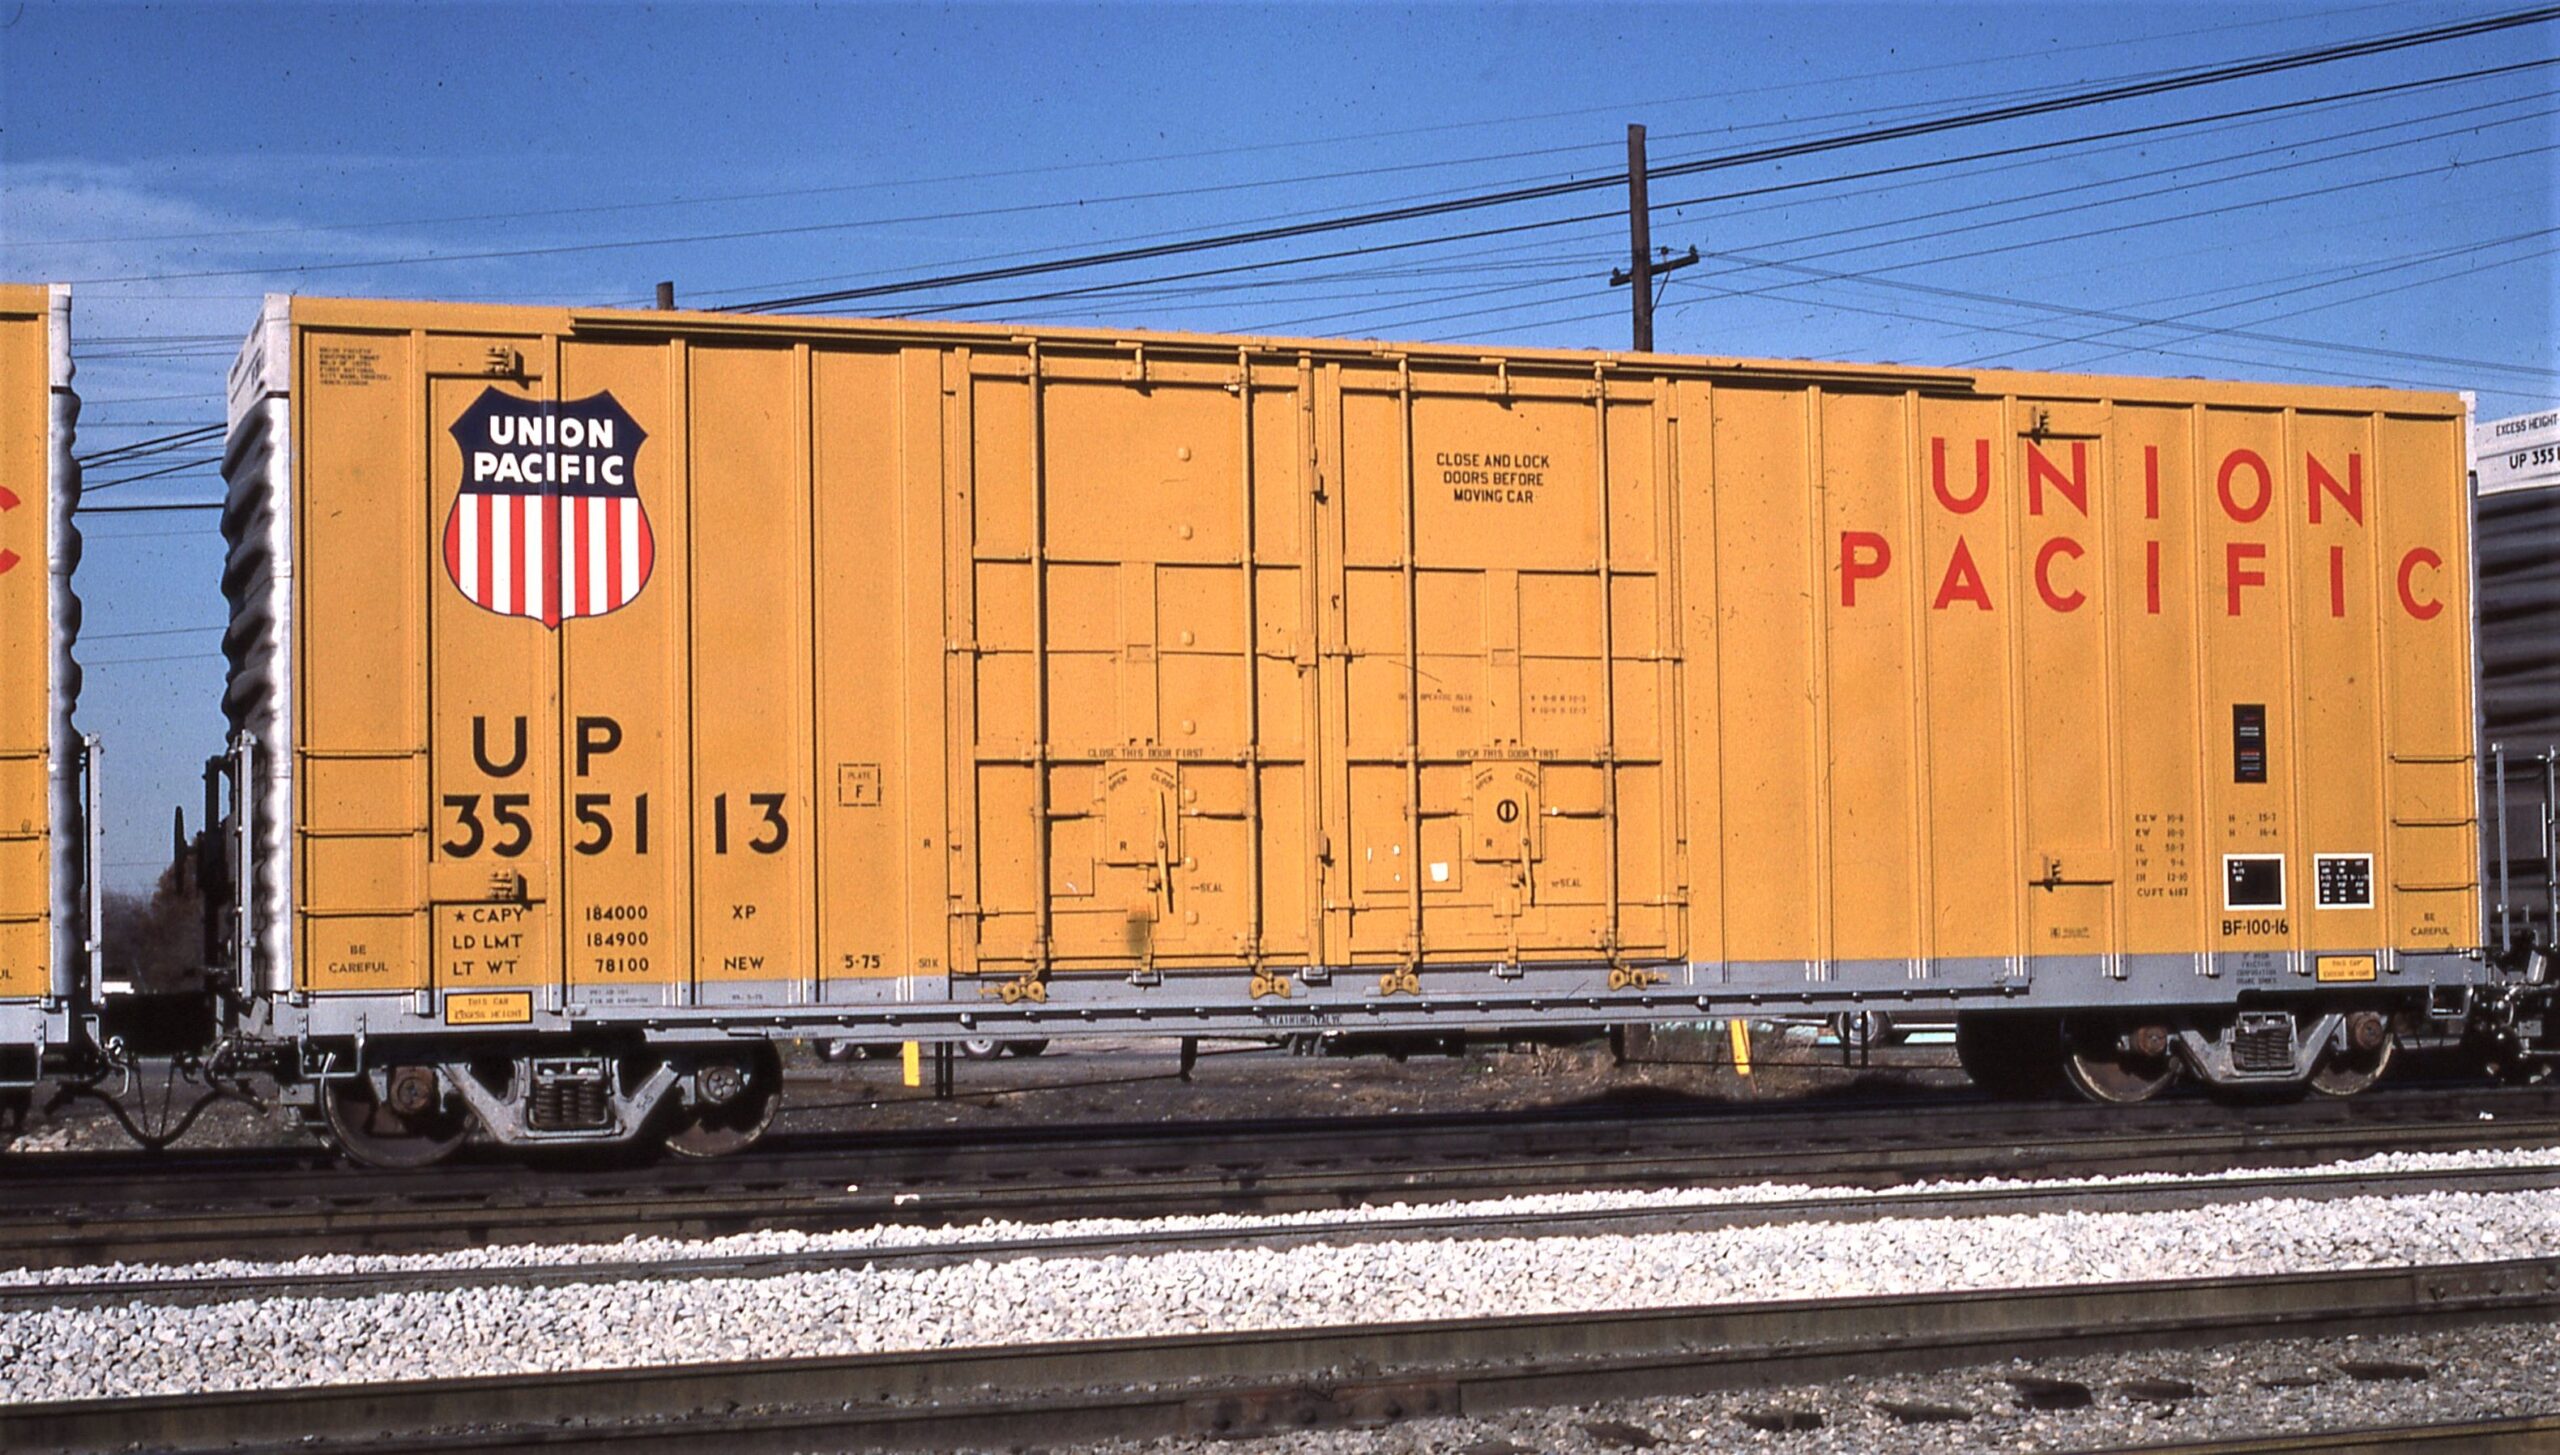 Union Pacific | Marion, Ohio | Box car double door #355113 | November 15, 1975 | Emery Gulash photograph